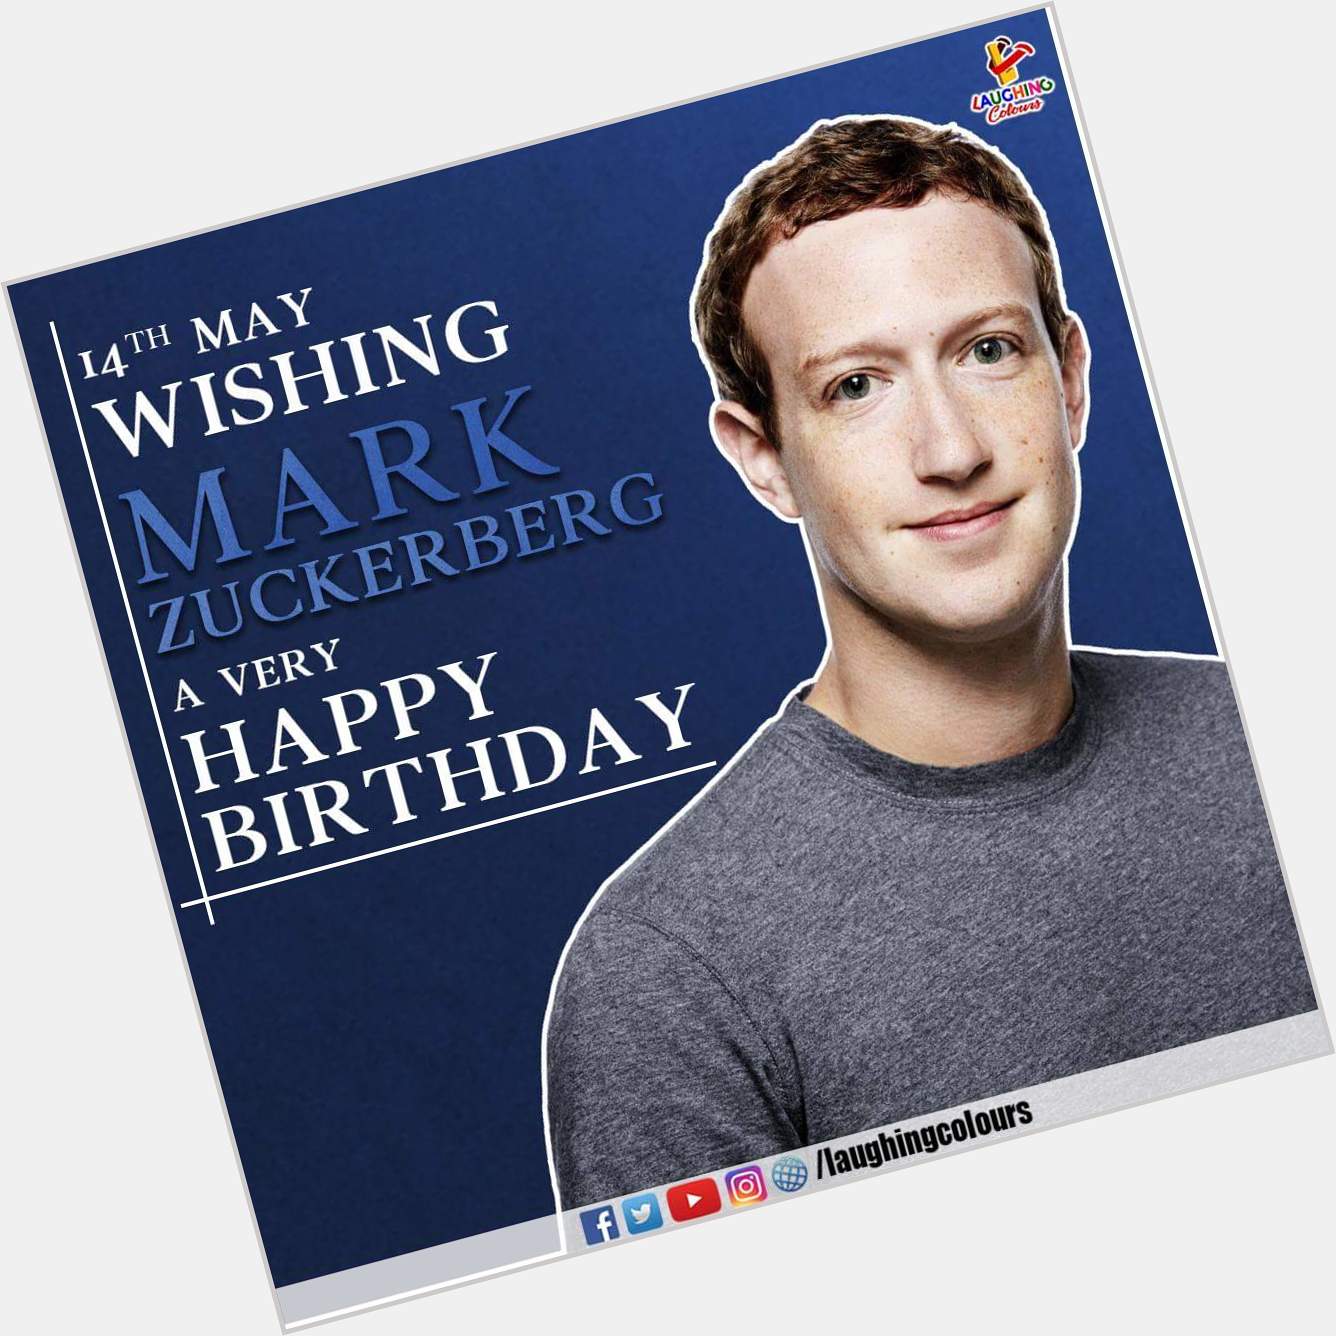 FB founder Mark Zuckerberg
Happy Birthday 